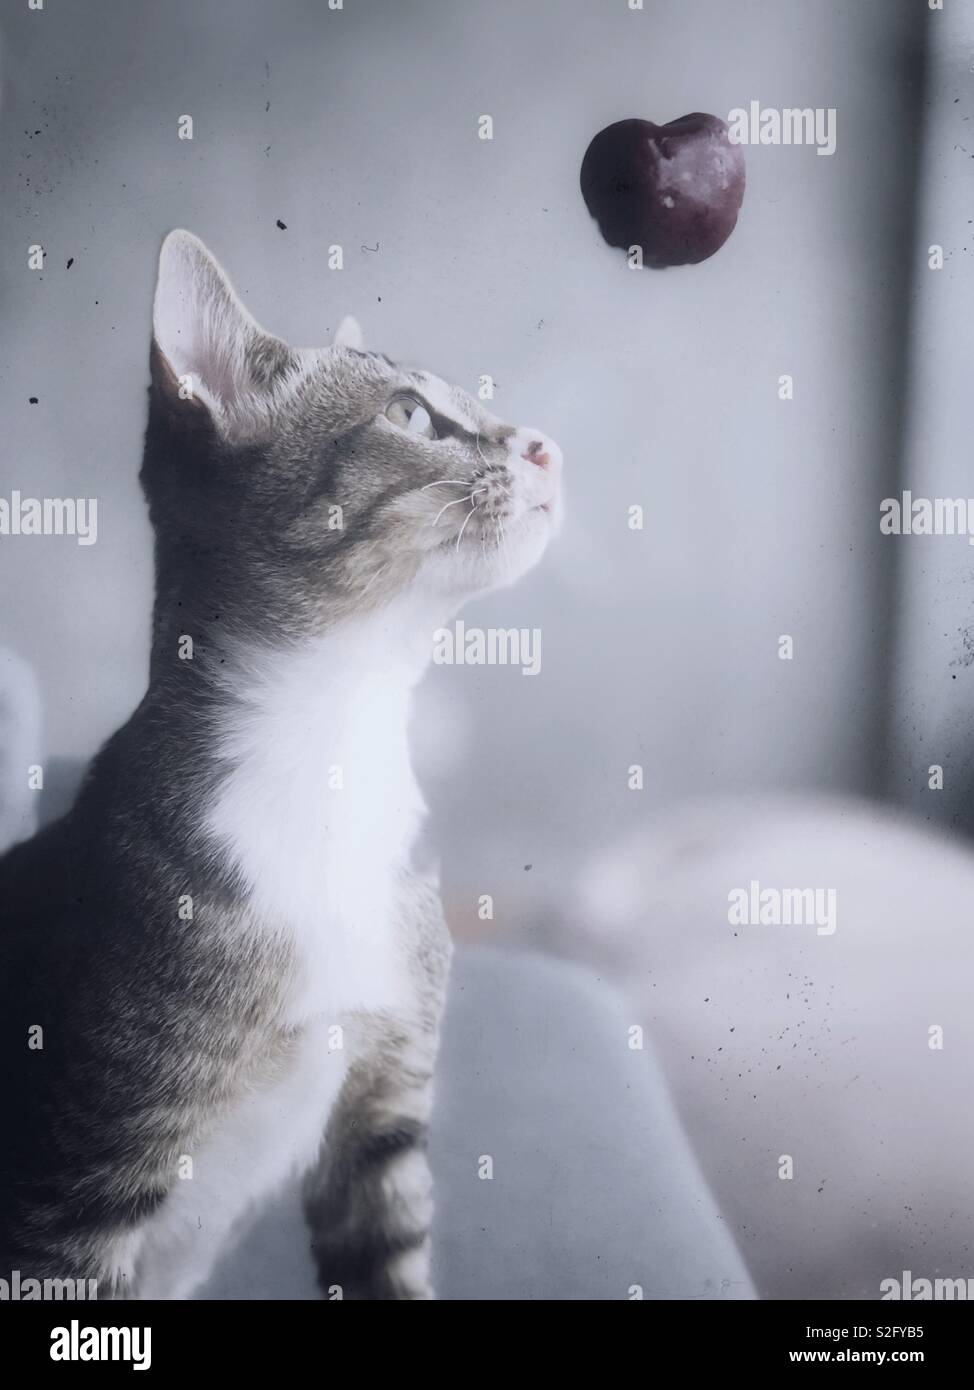 Kitten looking at floating cherry Stock Photo